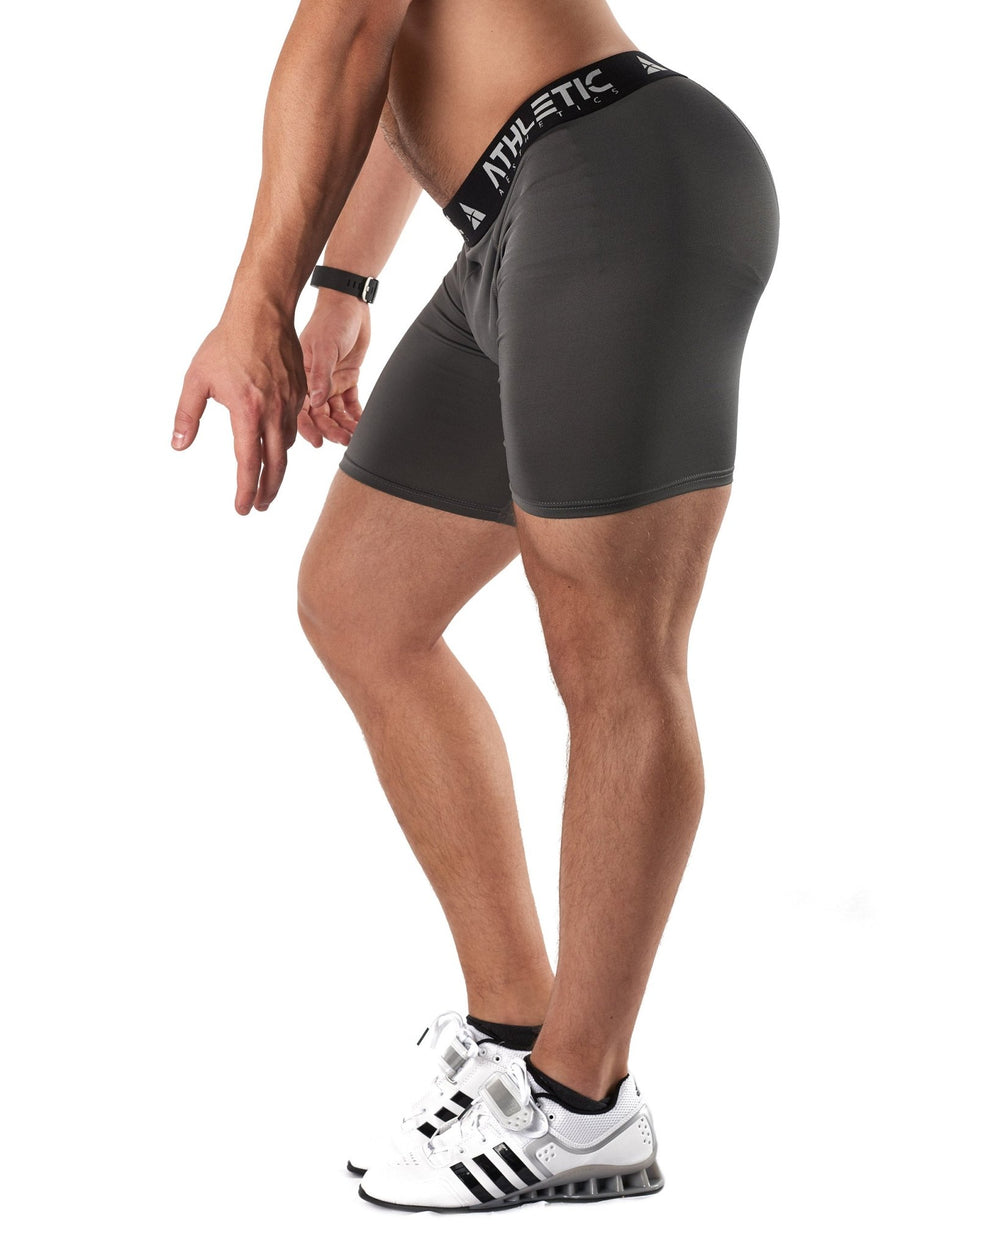 Compression Shorts (Grey) - Athletic Aesthetics